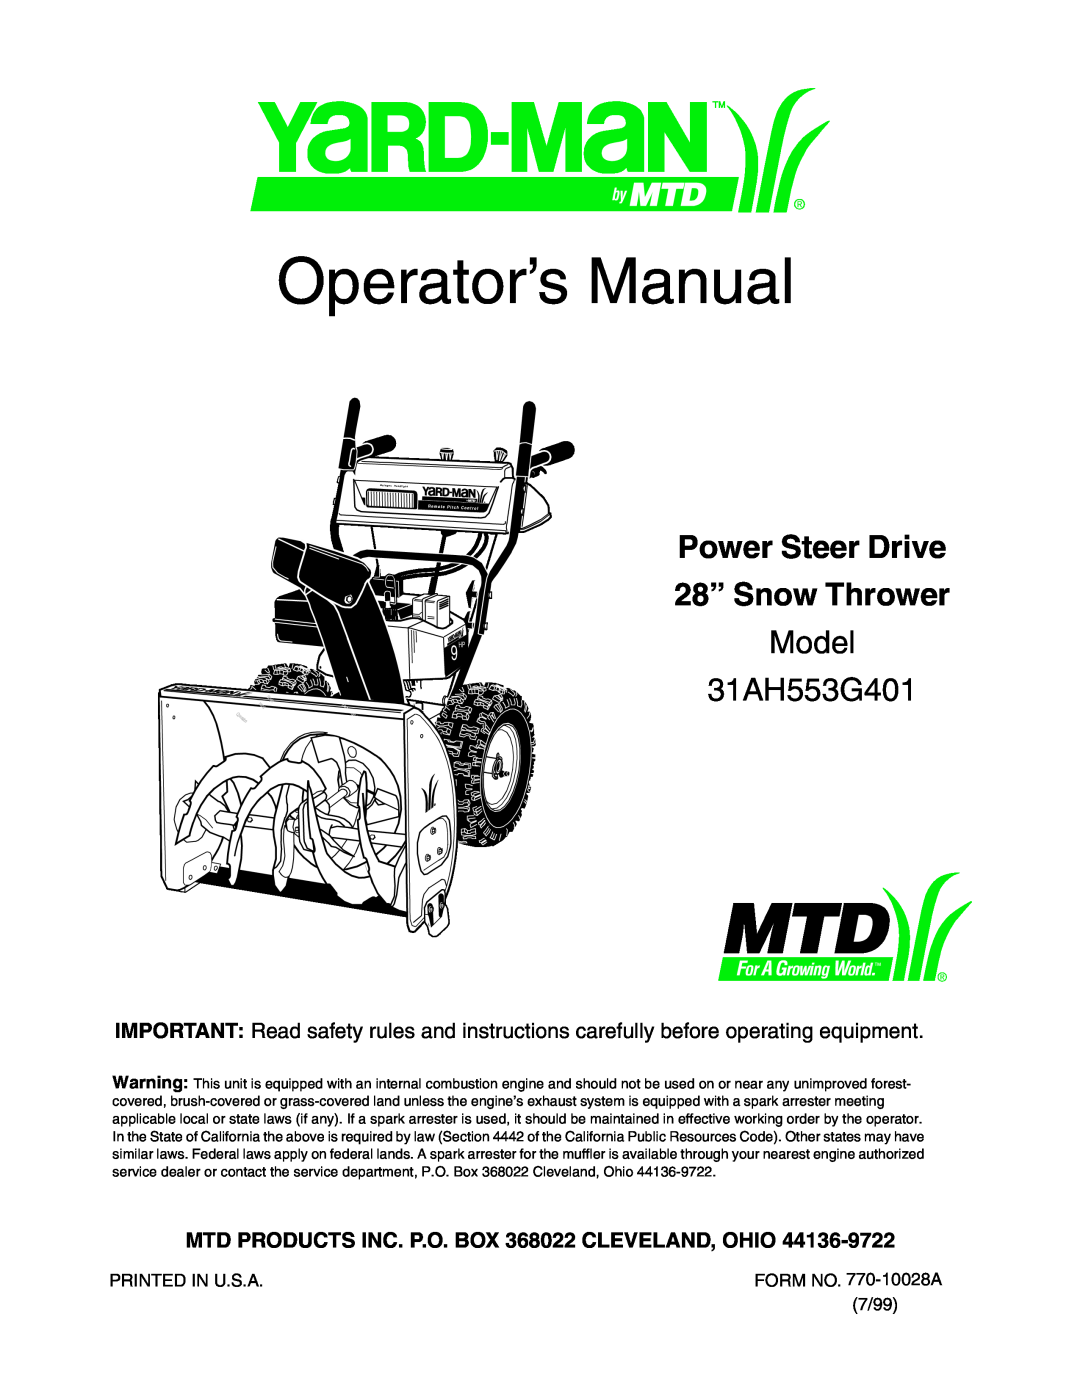 MTD manual Model 31AH553G401, Operator’s Manual, Power Steer Drive 28” Snow Thrower 